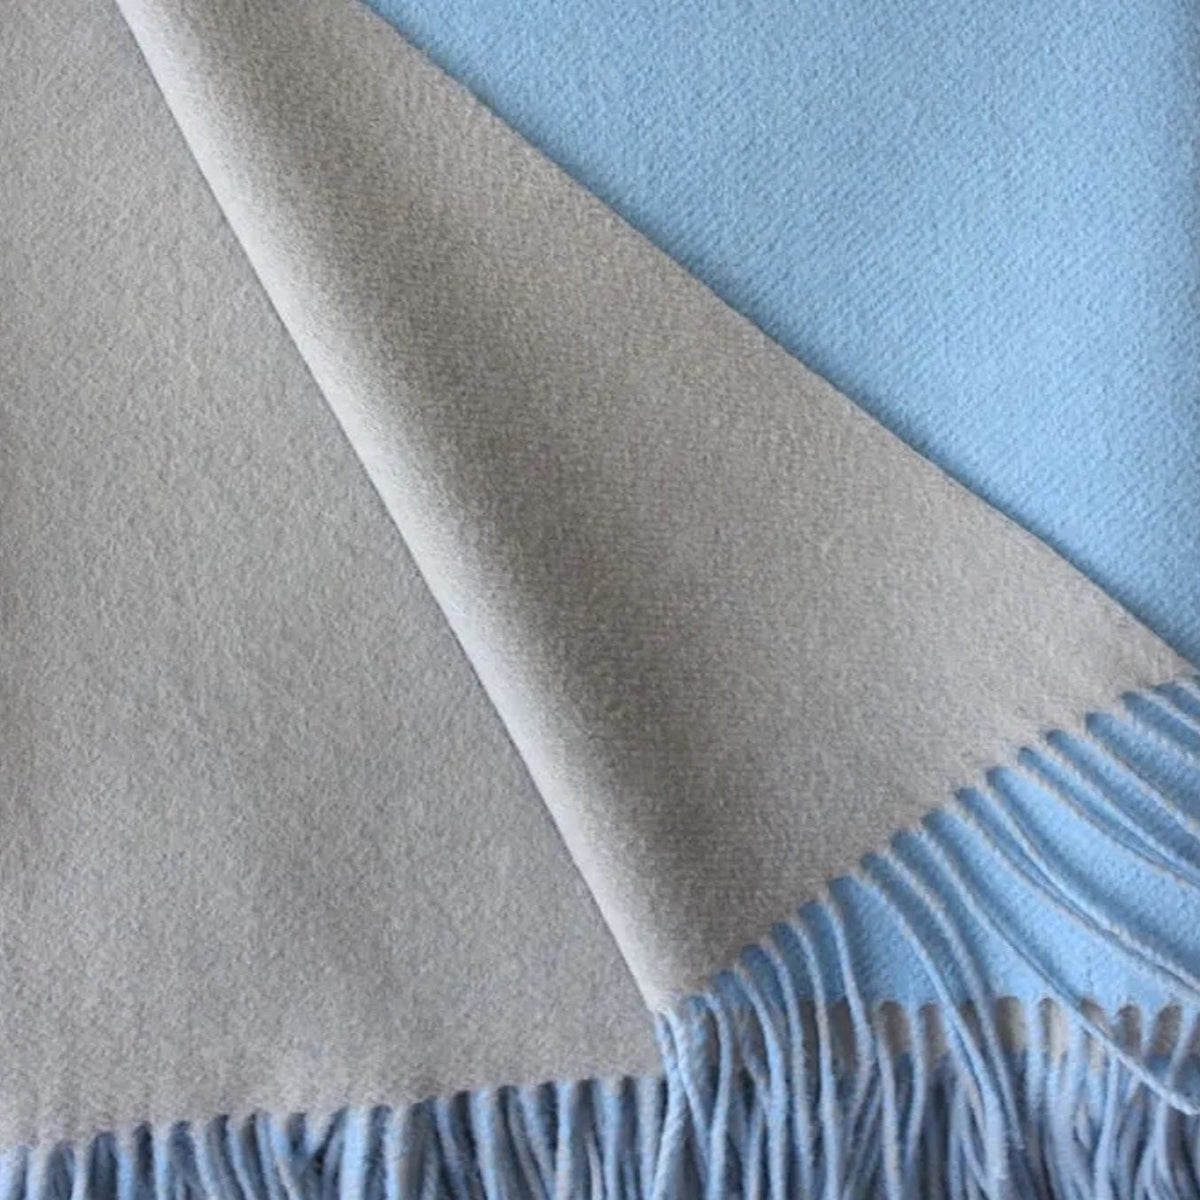 Fabric closeup of Alashan Double Faced Classic Cashmere Blend Throw - Carolina Blue/Platinum color